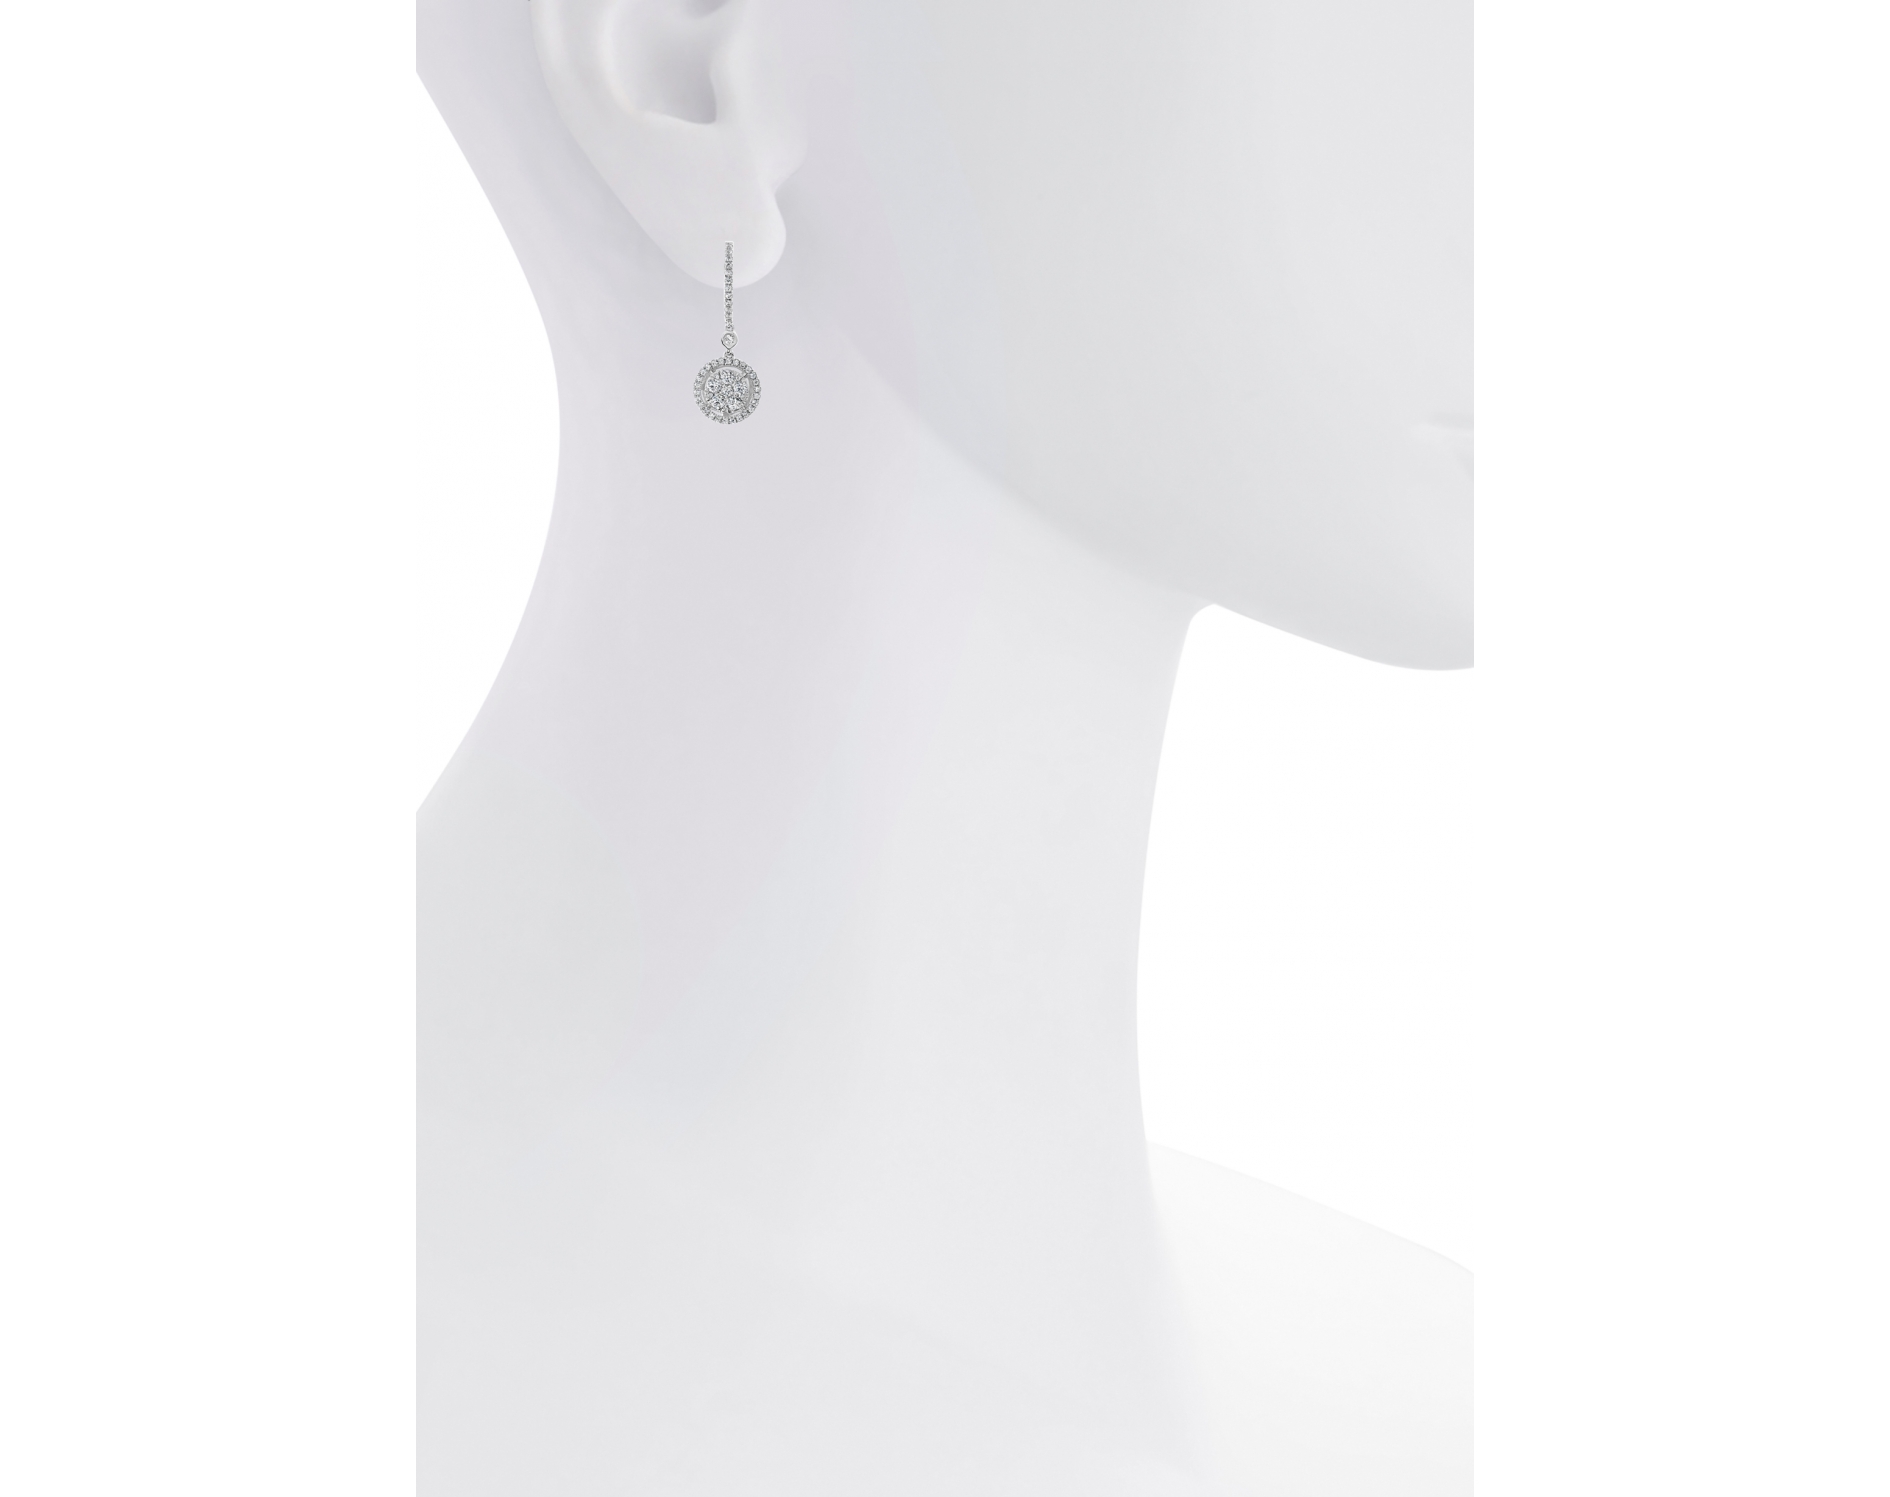 18k white gold halo illusion set diamond earrings with upstones Photos & images